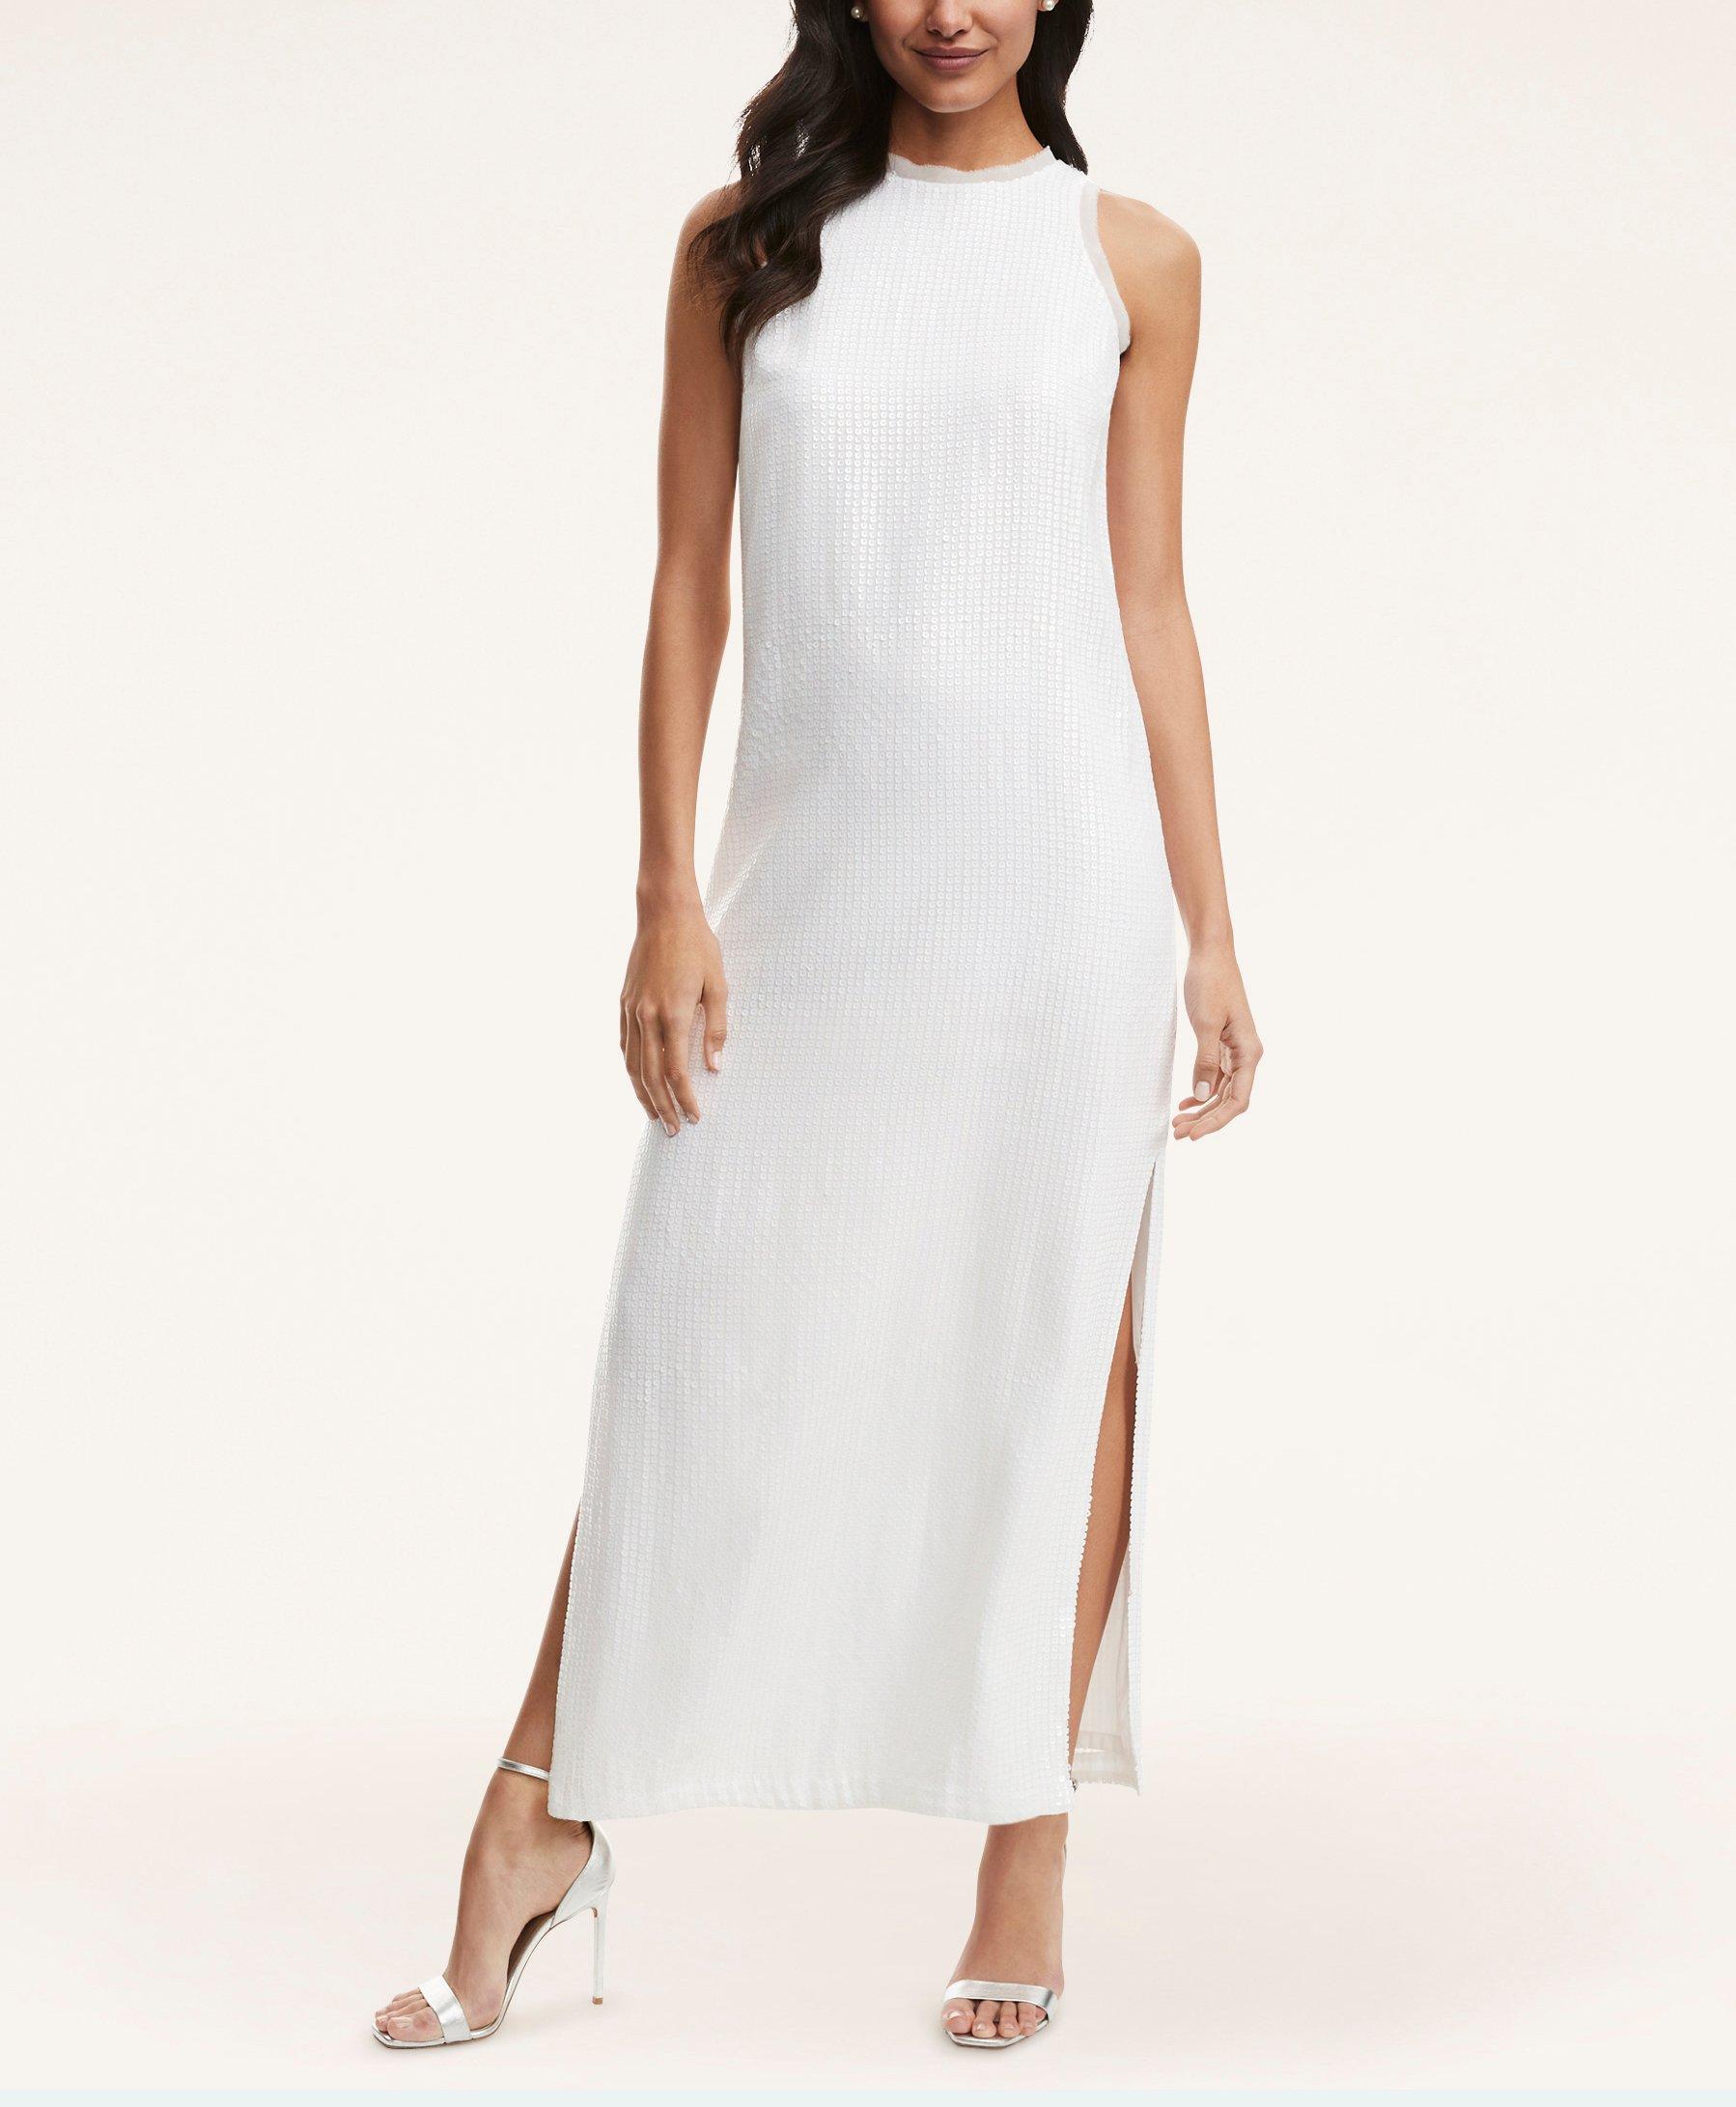 Brooks Brothers Iridescent Sequin Sleeveless Dress | White | Size 4